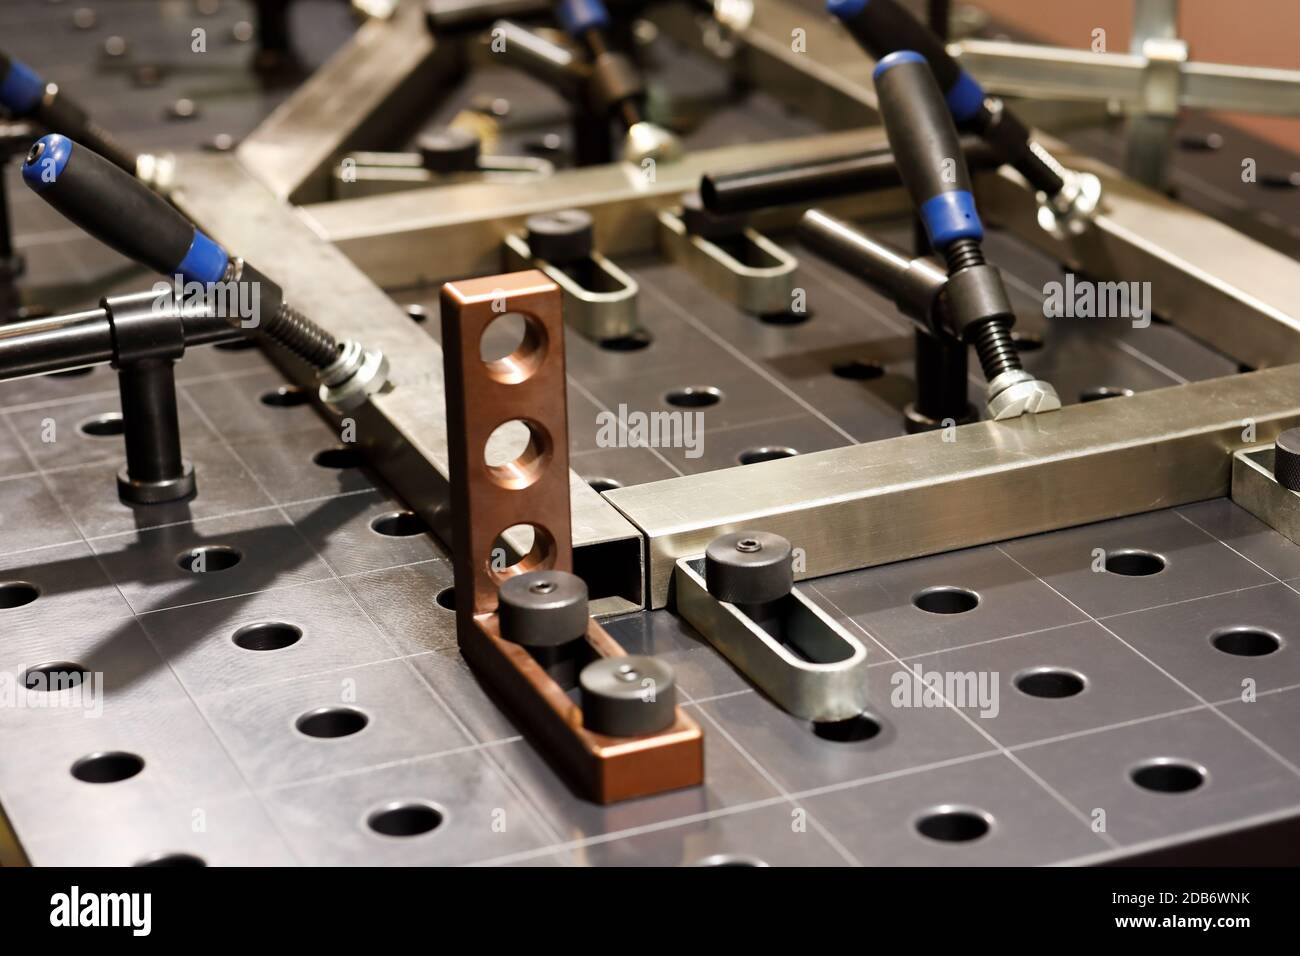 Welding platen table with fixtures and jig design. Selective focus. Stock Photo